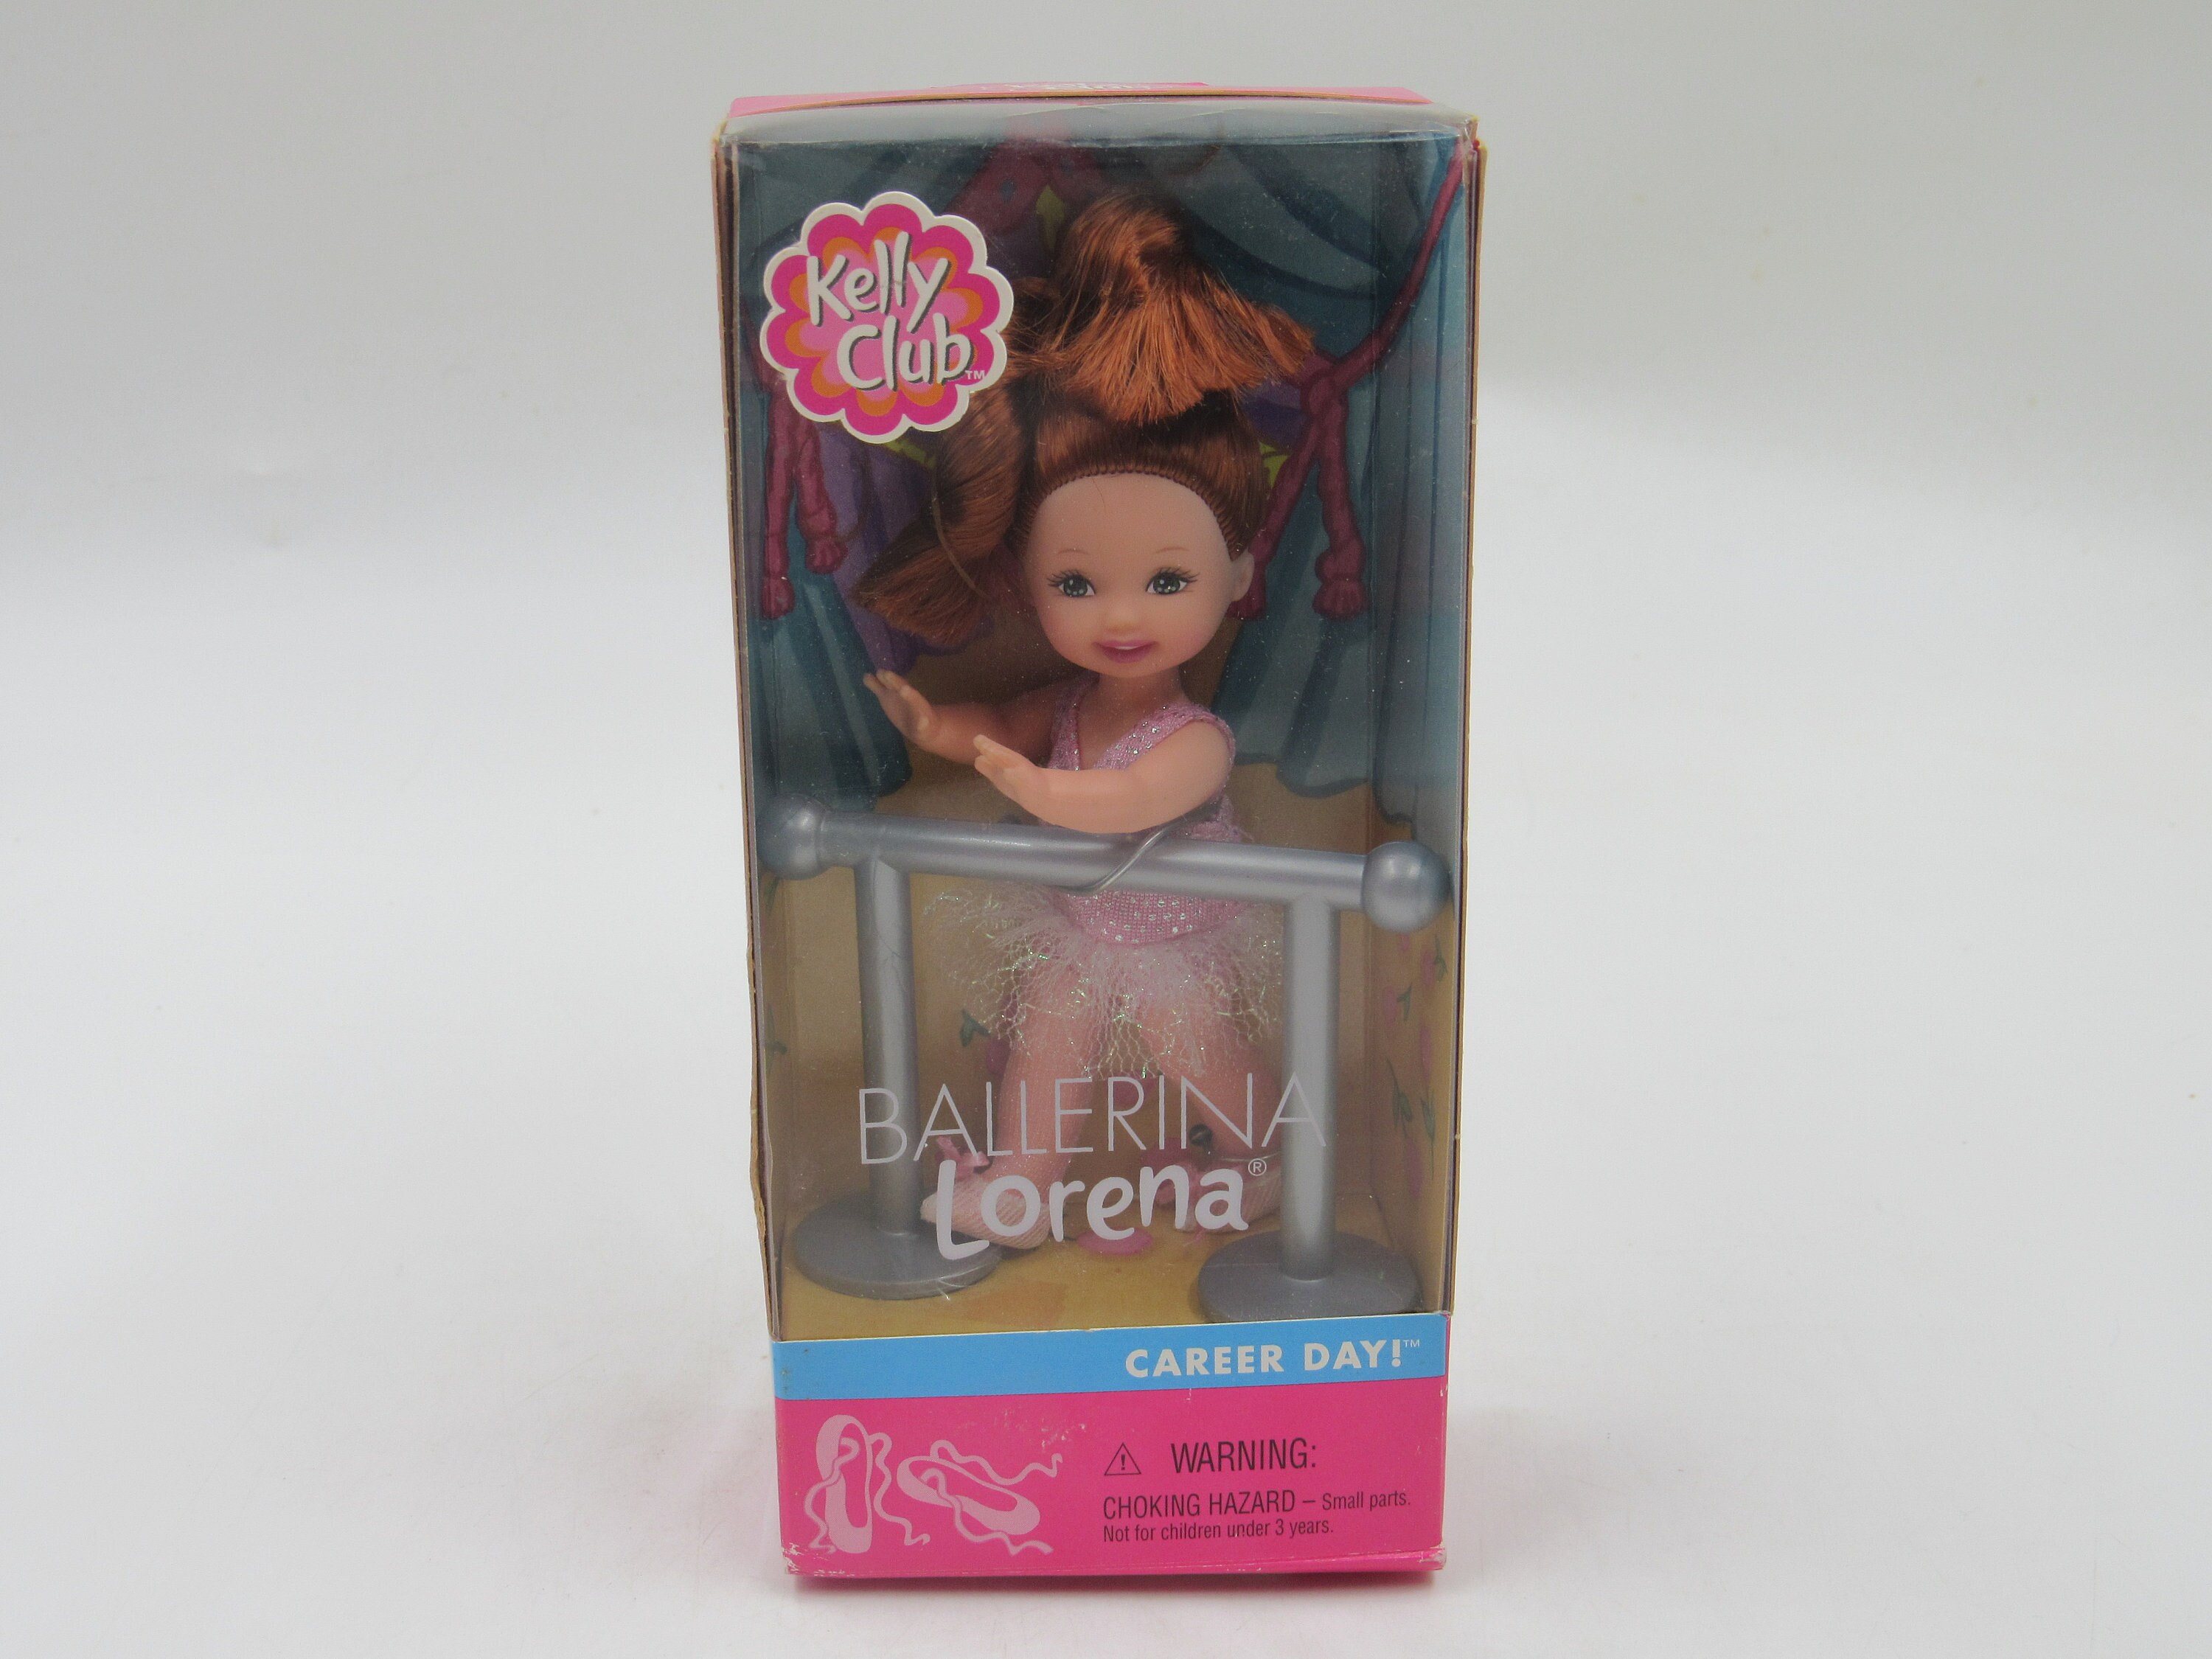 Kelly Club Ballerina Lorena Career Day Doll Mattel 2001 - Etsy 日本